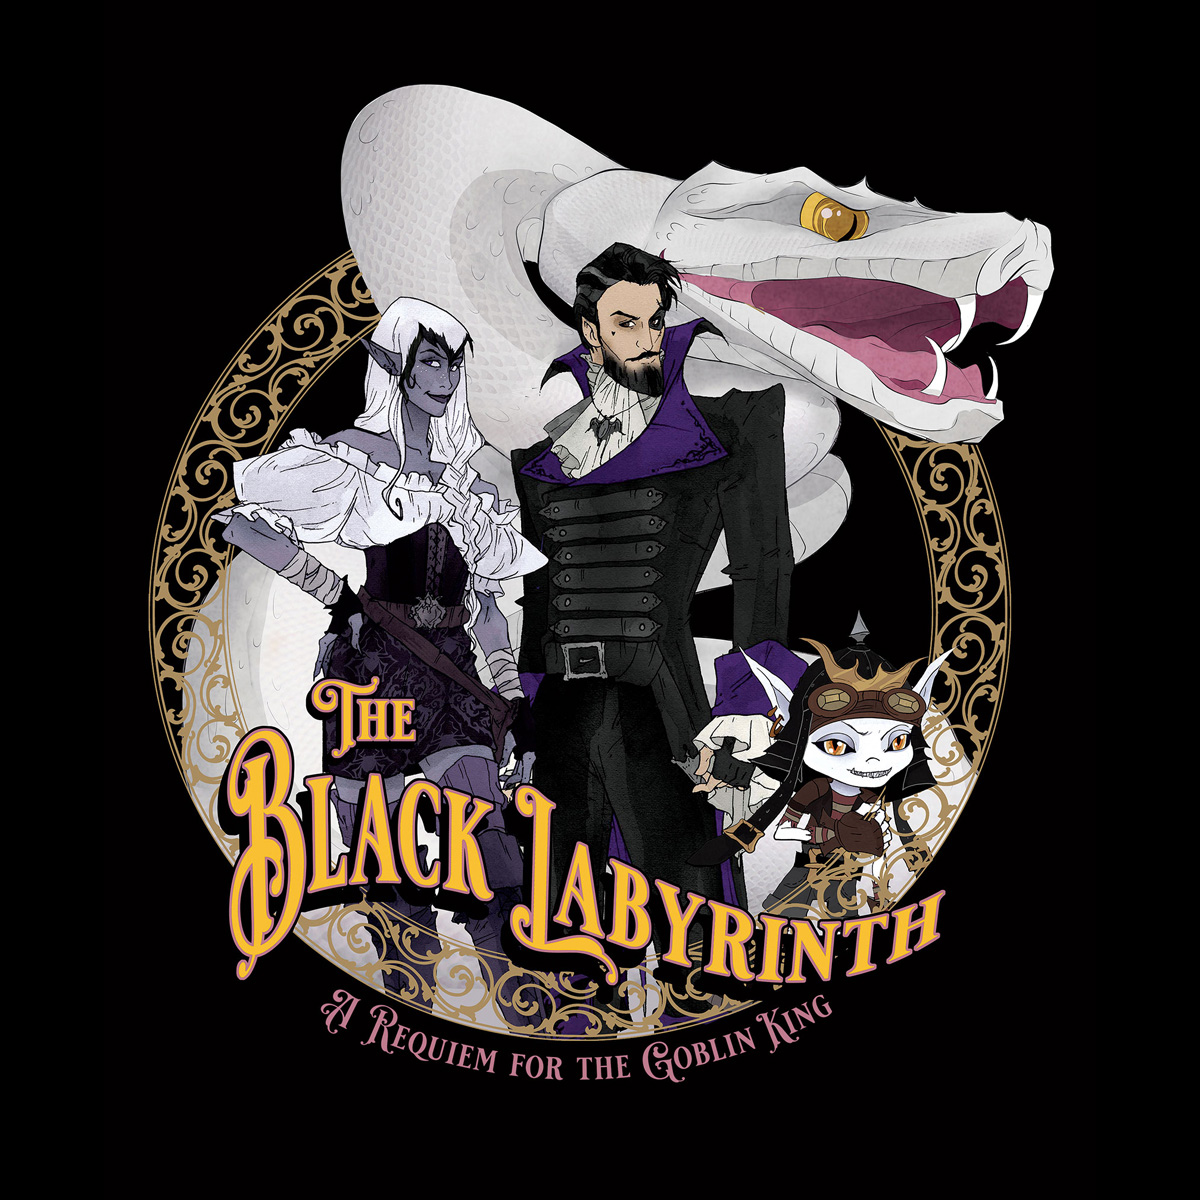 11"x17" Black Labyrinth Poster on Cardstock (SIGNED!)